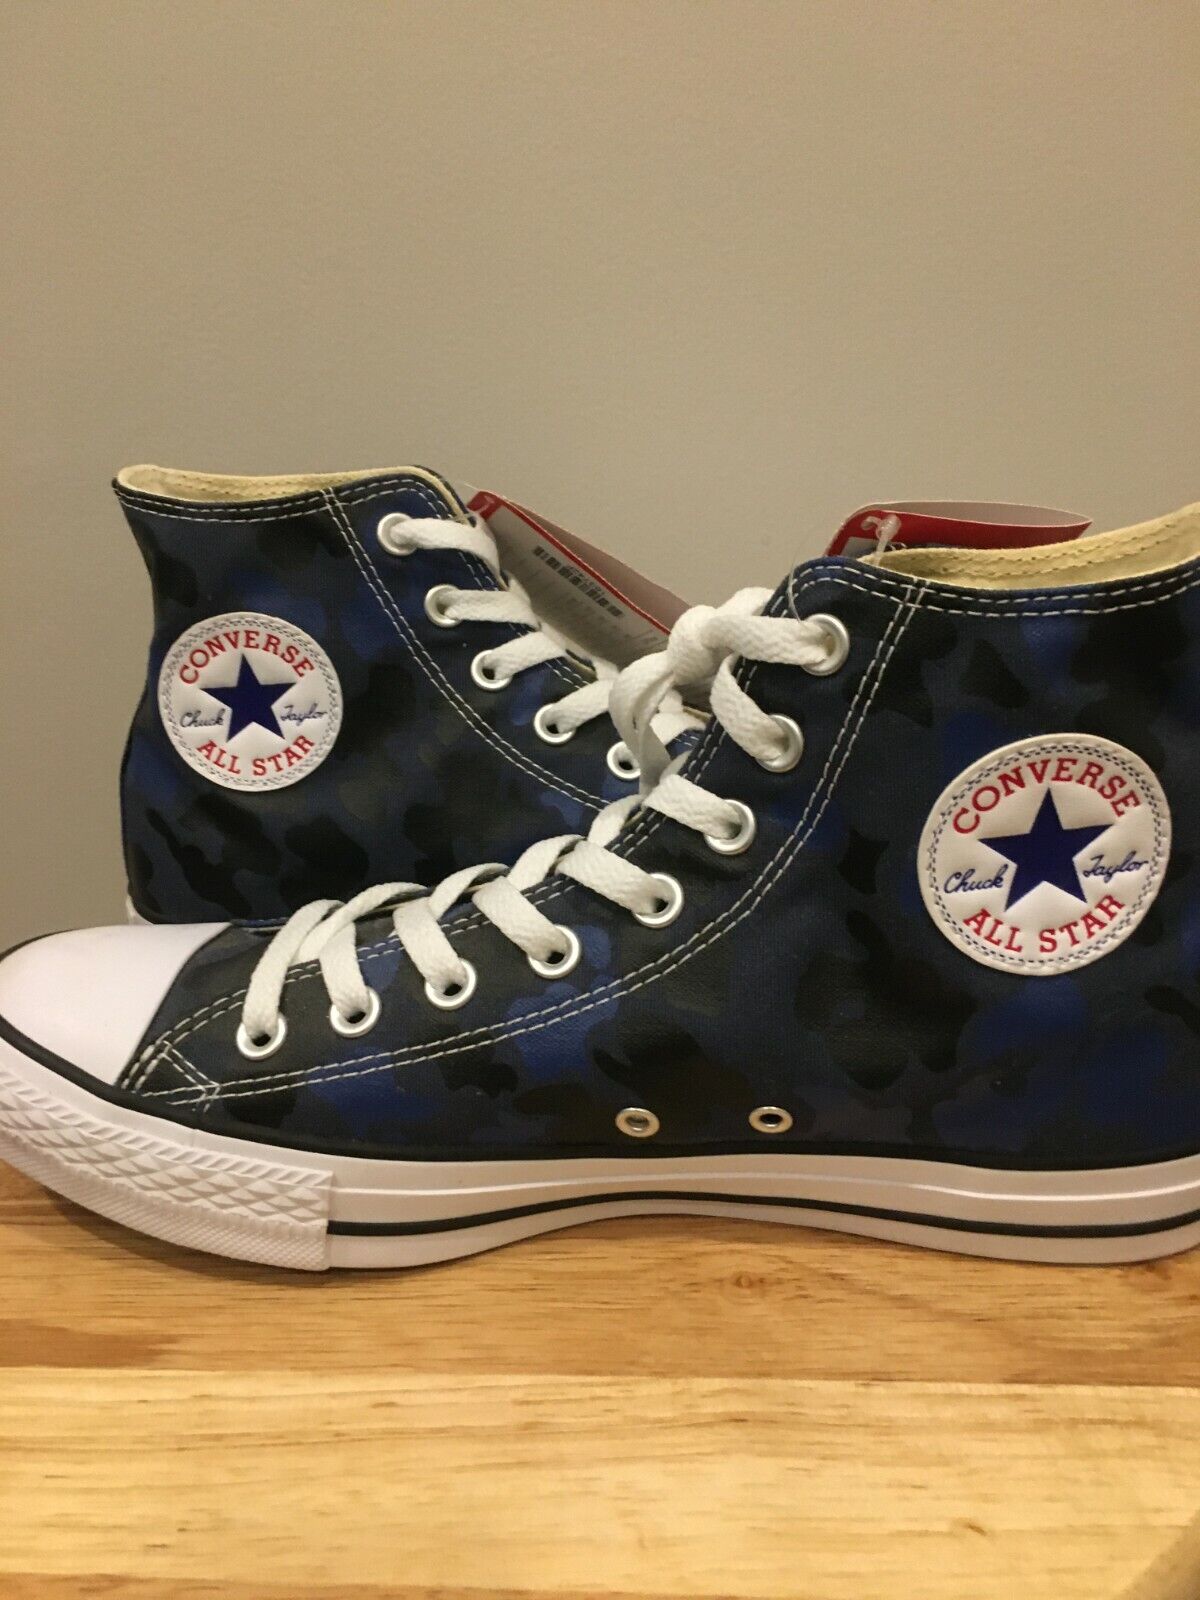 Converse Converse Chuck Taylor All Star High Tops - Blue Camo - Size 9 -  Samples | eBay